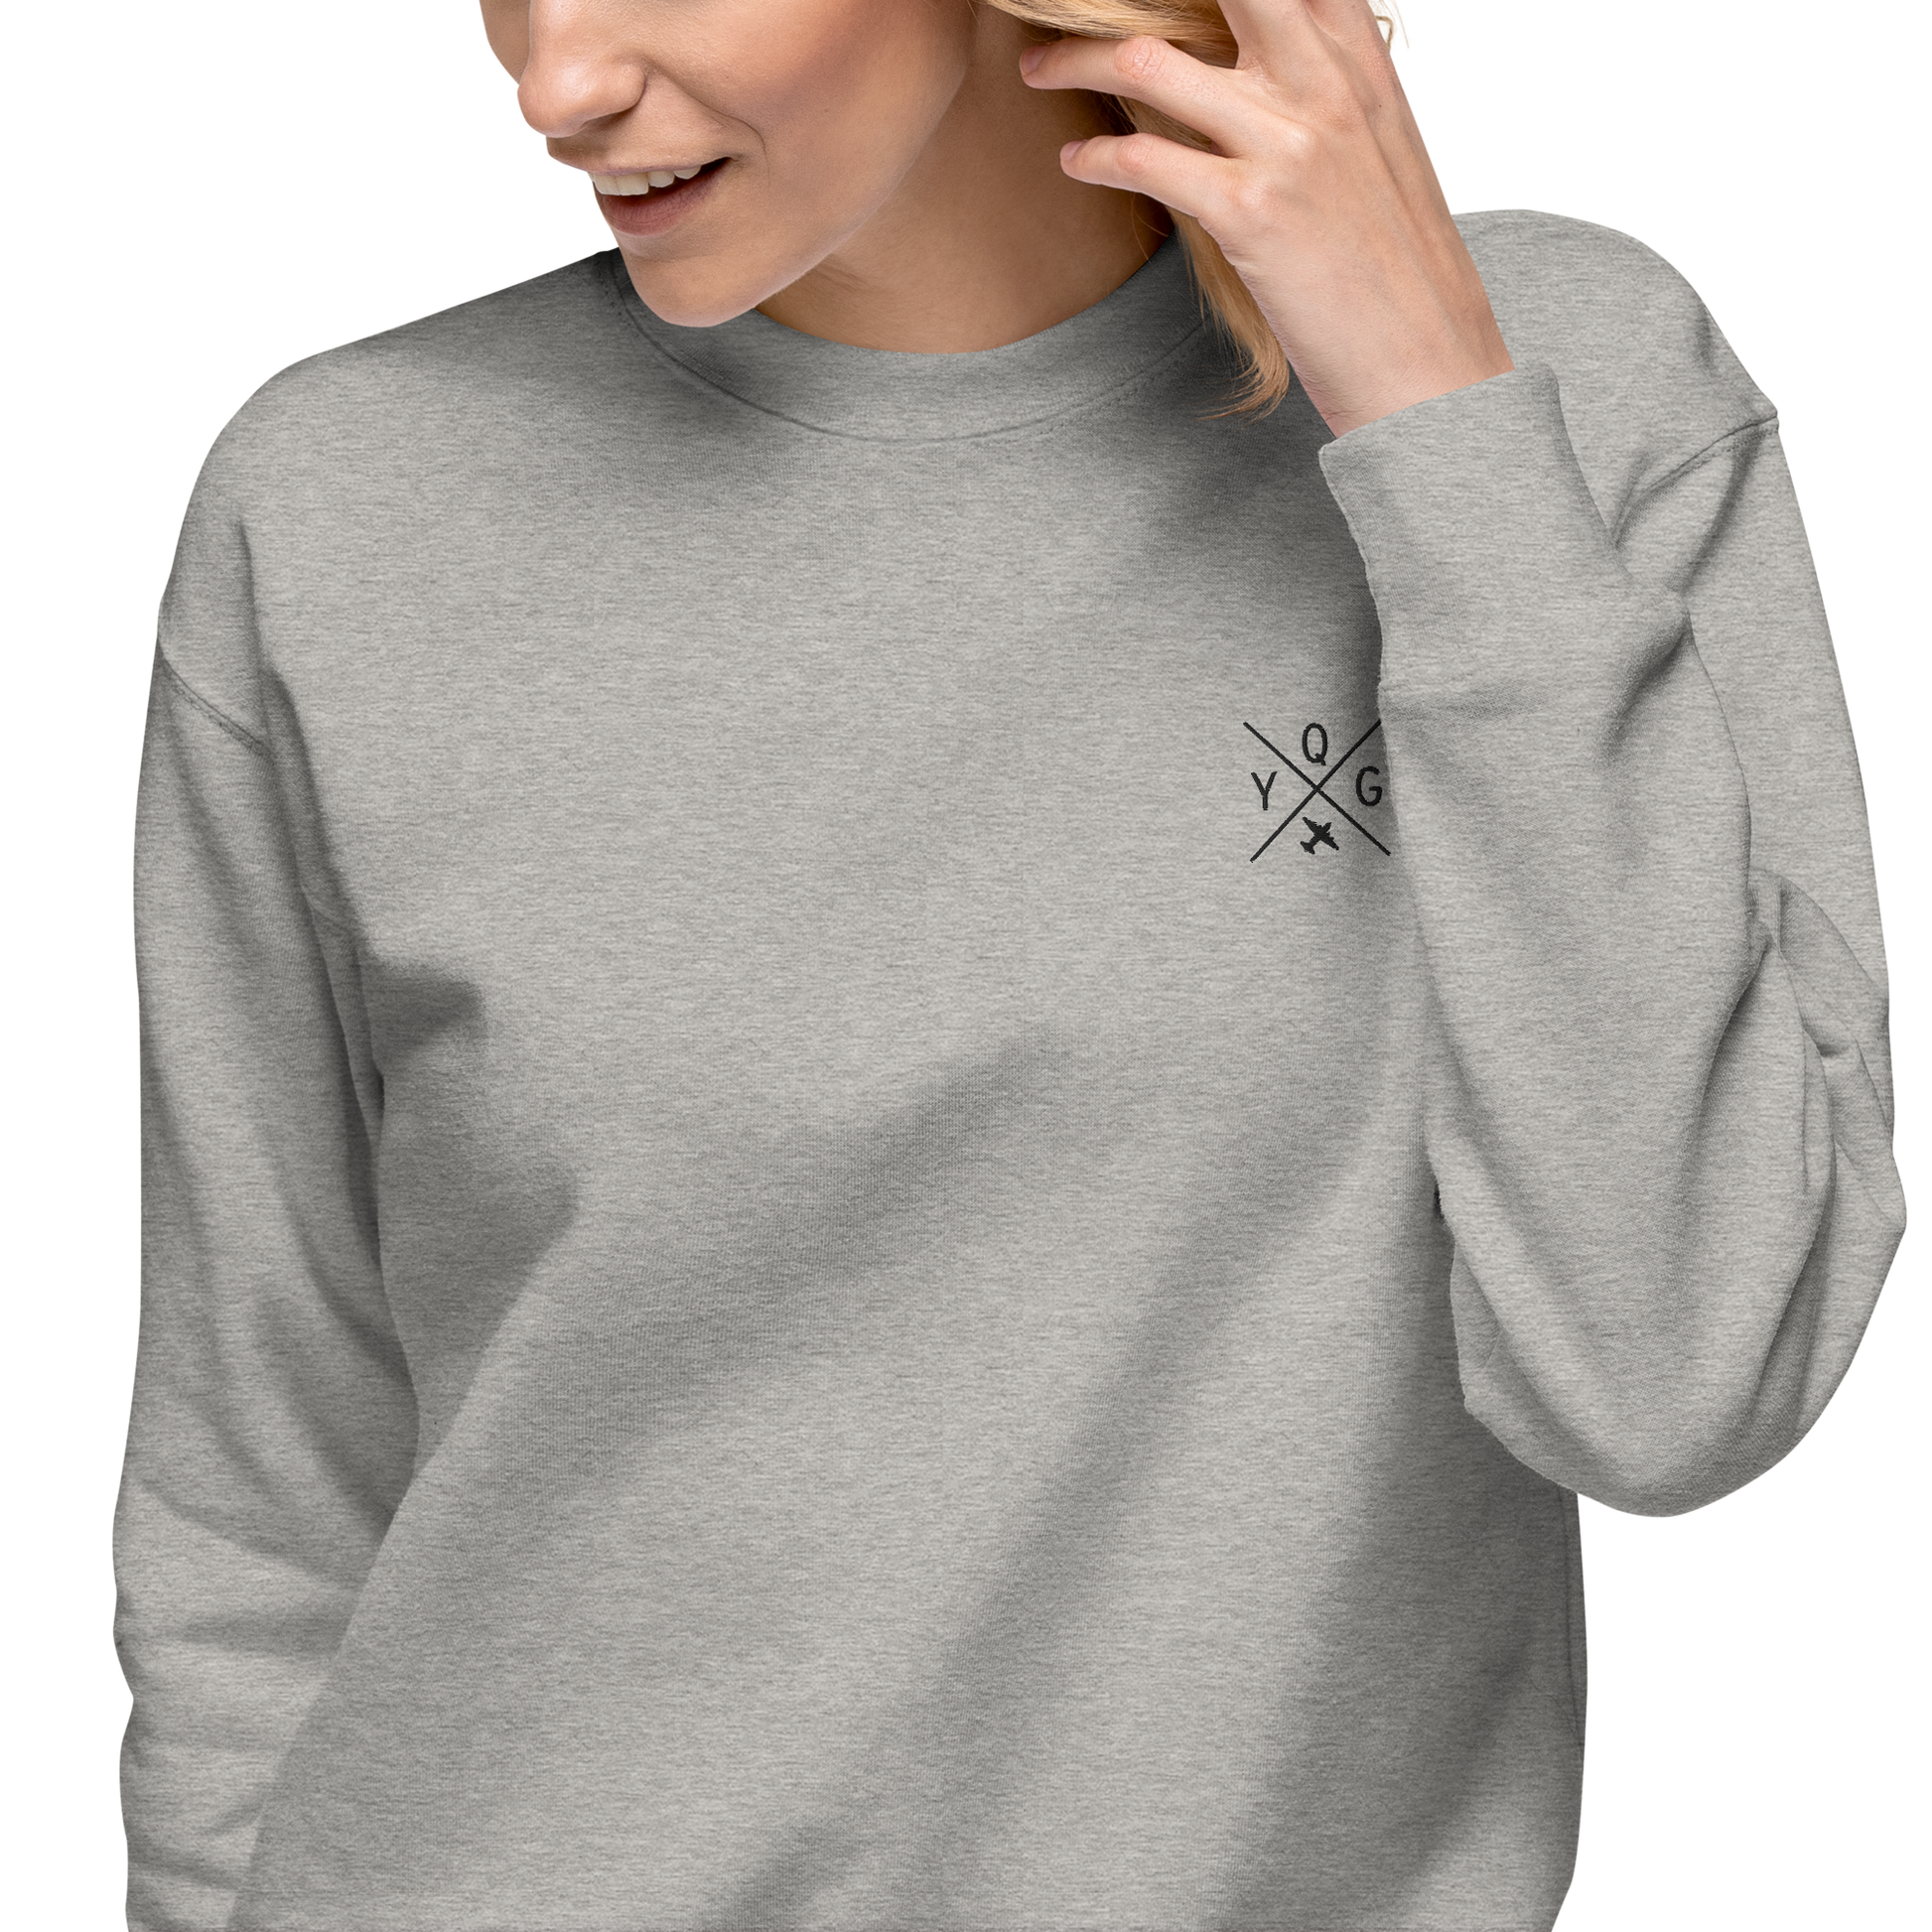 YHM Designs - YQG Windsor Premium Sweatshirt - Crossed-X Design with Airport Code and Vintage Propliner - Black Embroidery - Image 03